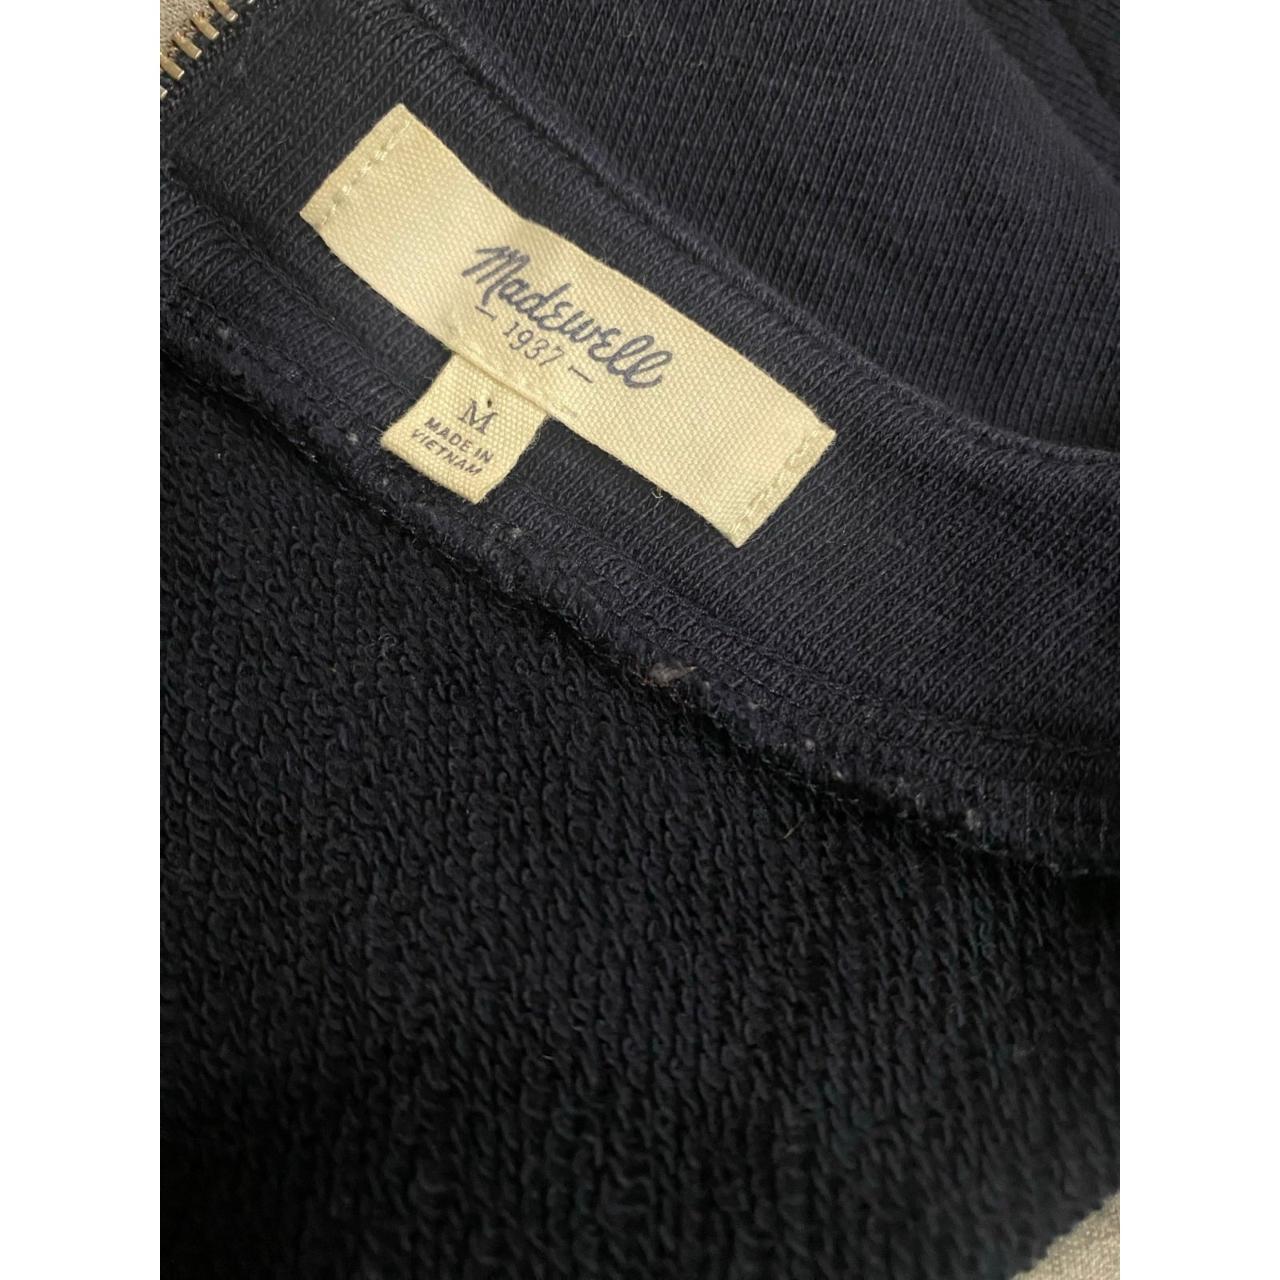 Madewell Sweater size M new - Depop